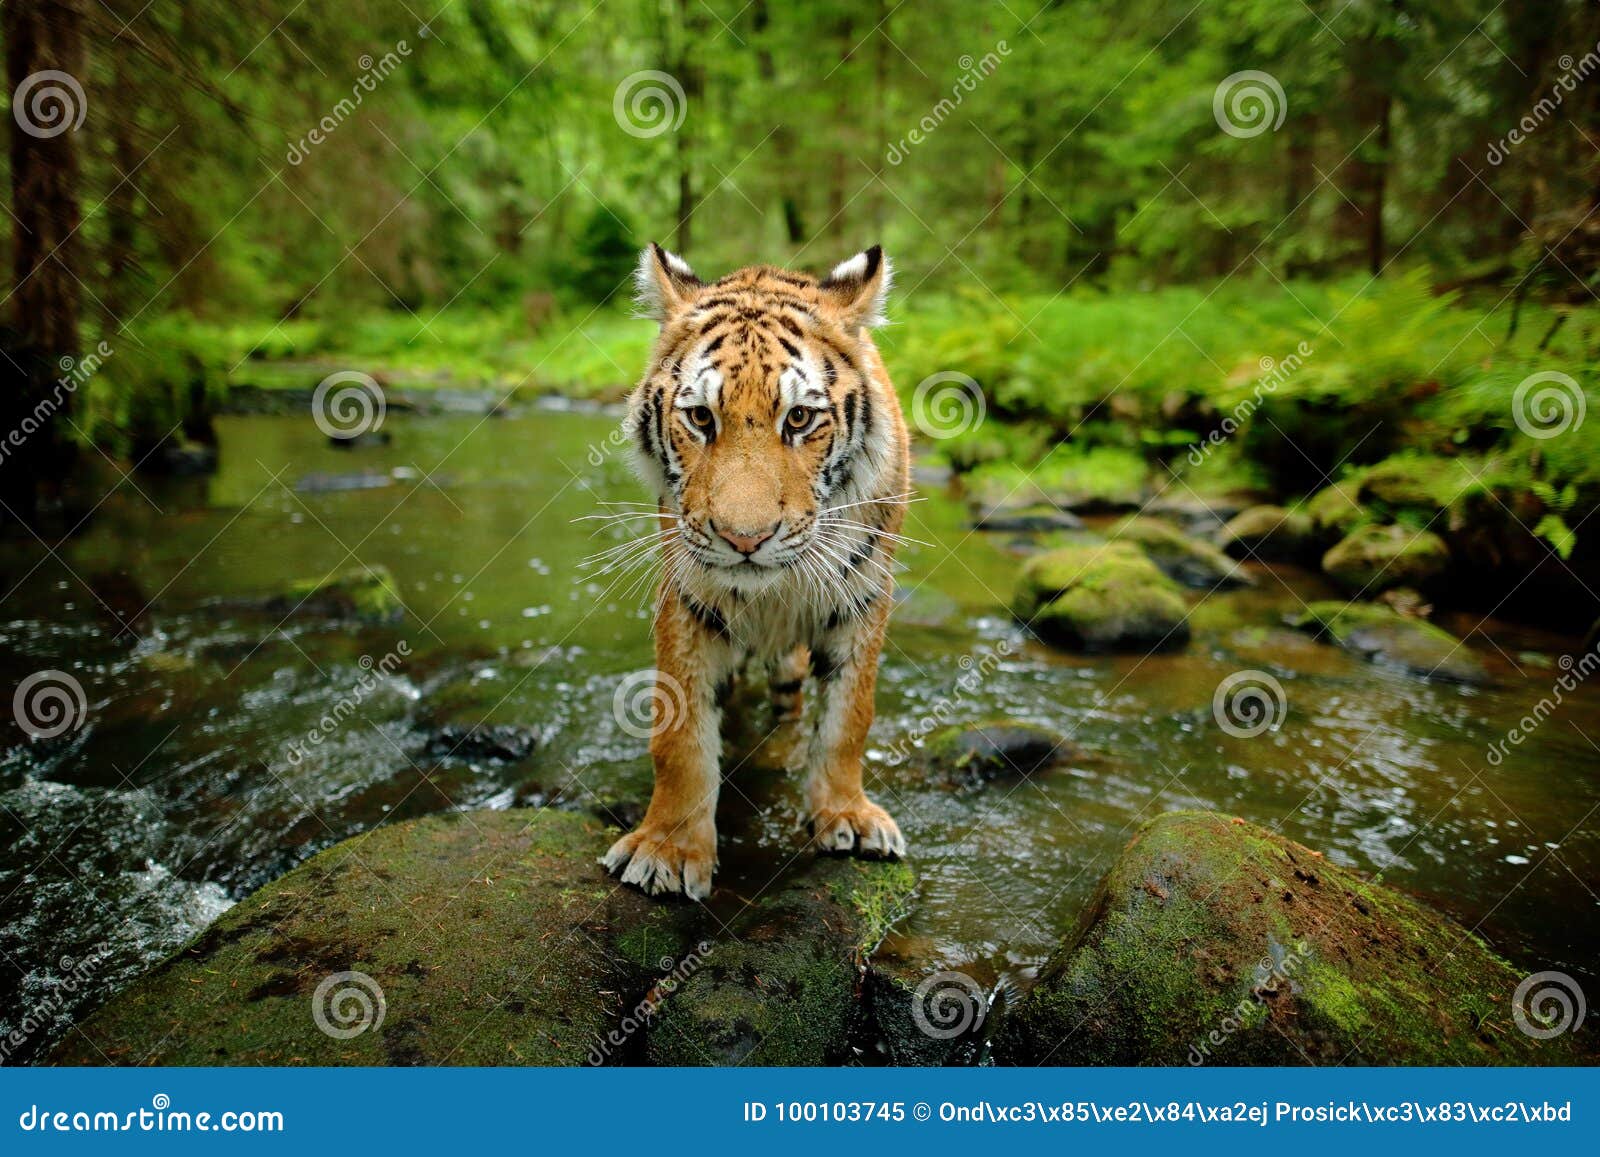 amur tiger walking in stone river water. danger animal, tajga, russia. siberian tiger, wide lens angle view of wild animal. big ca